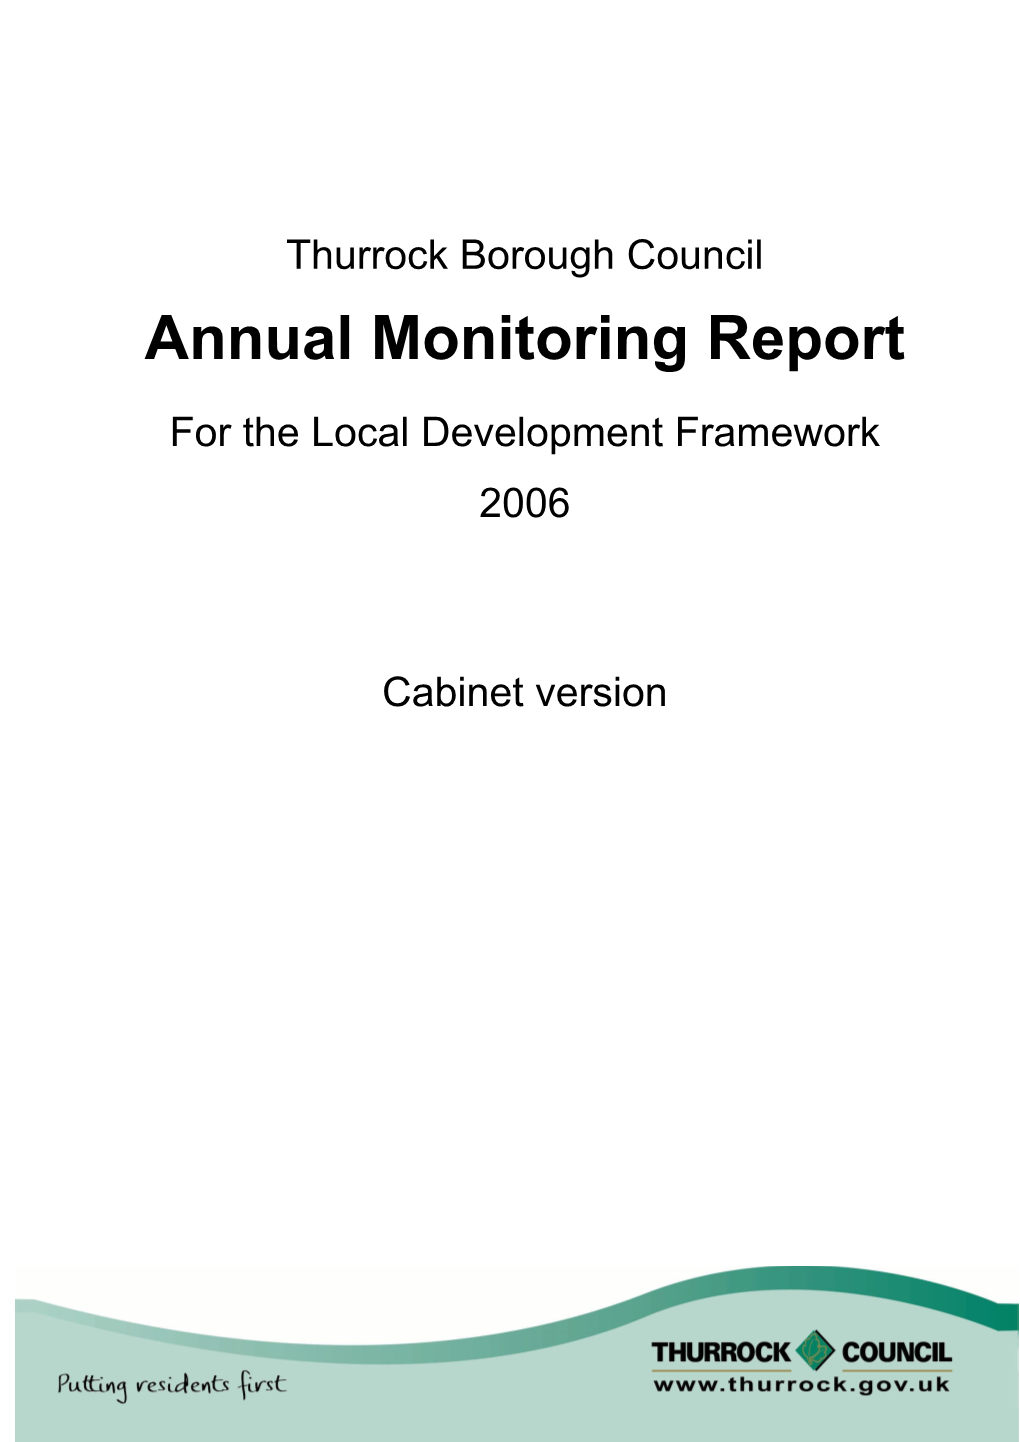 Thurrock Borough Council Annual Monitoring Report